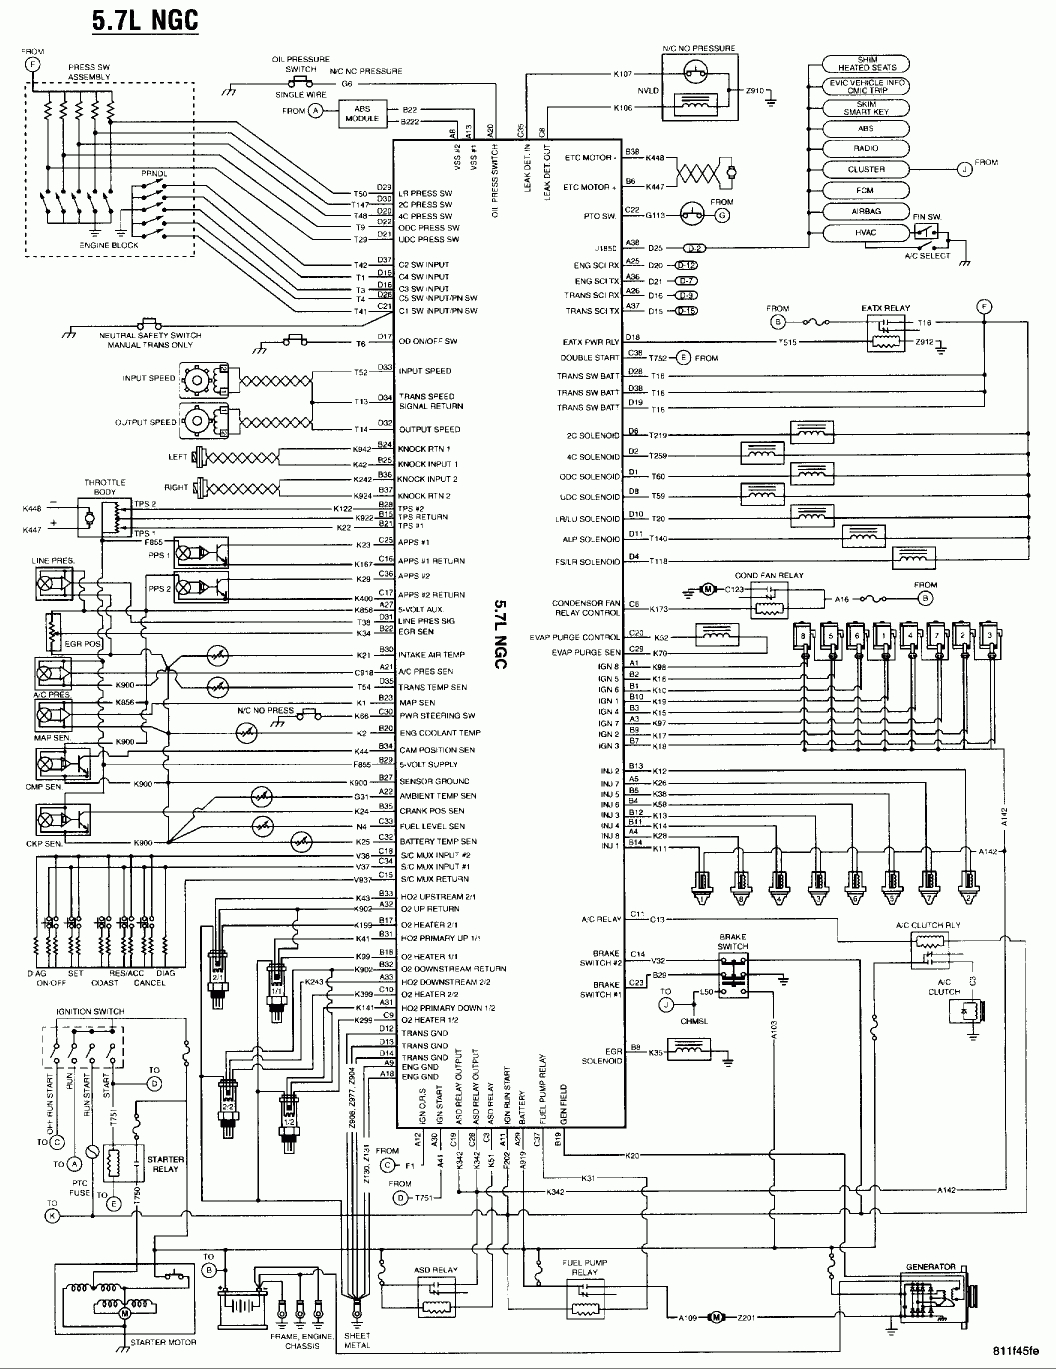 2004 Dodge Durango Radio Wiring Diagram - Cadician's Blog